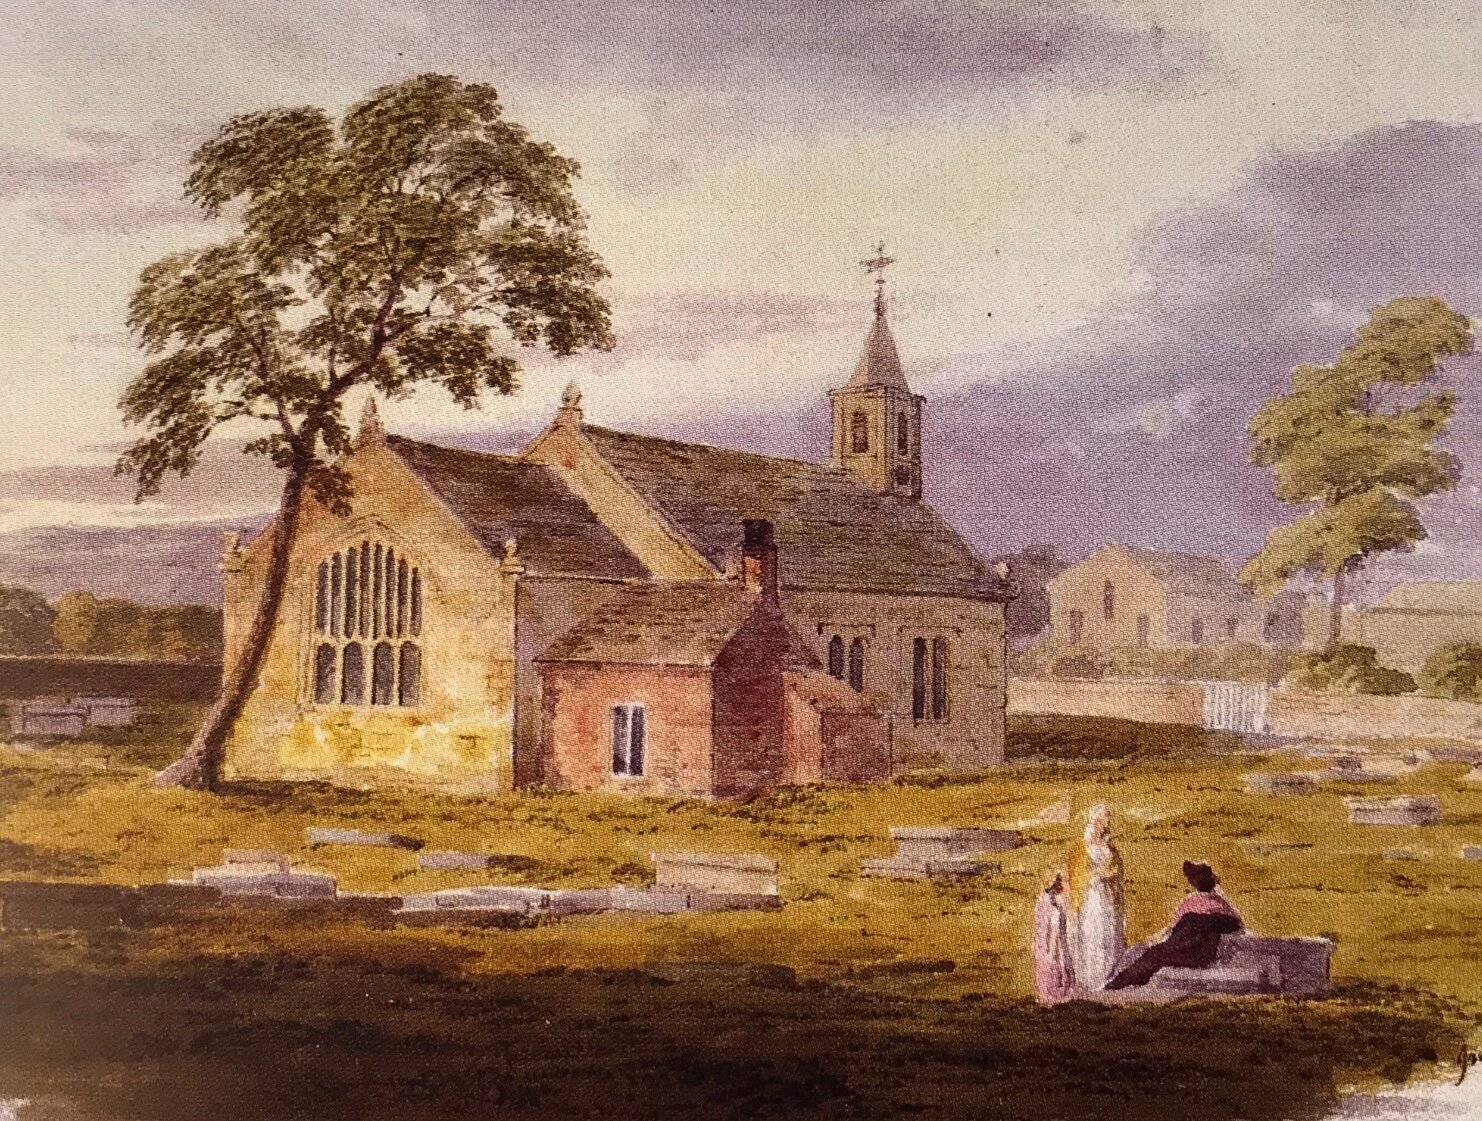 St Michael's Chapel (1619-1837), Headingley Lane, undated